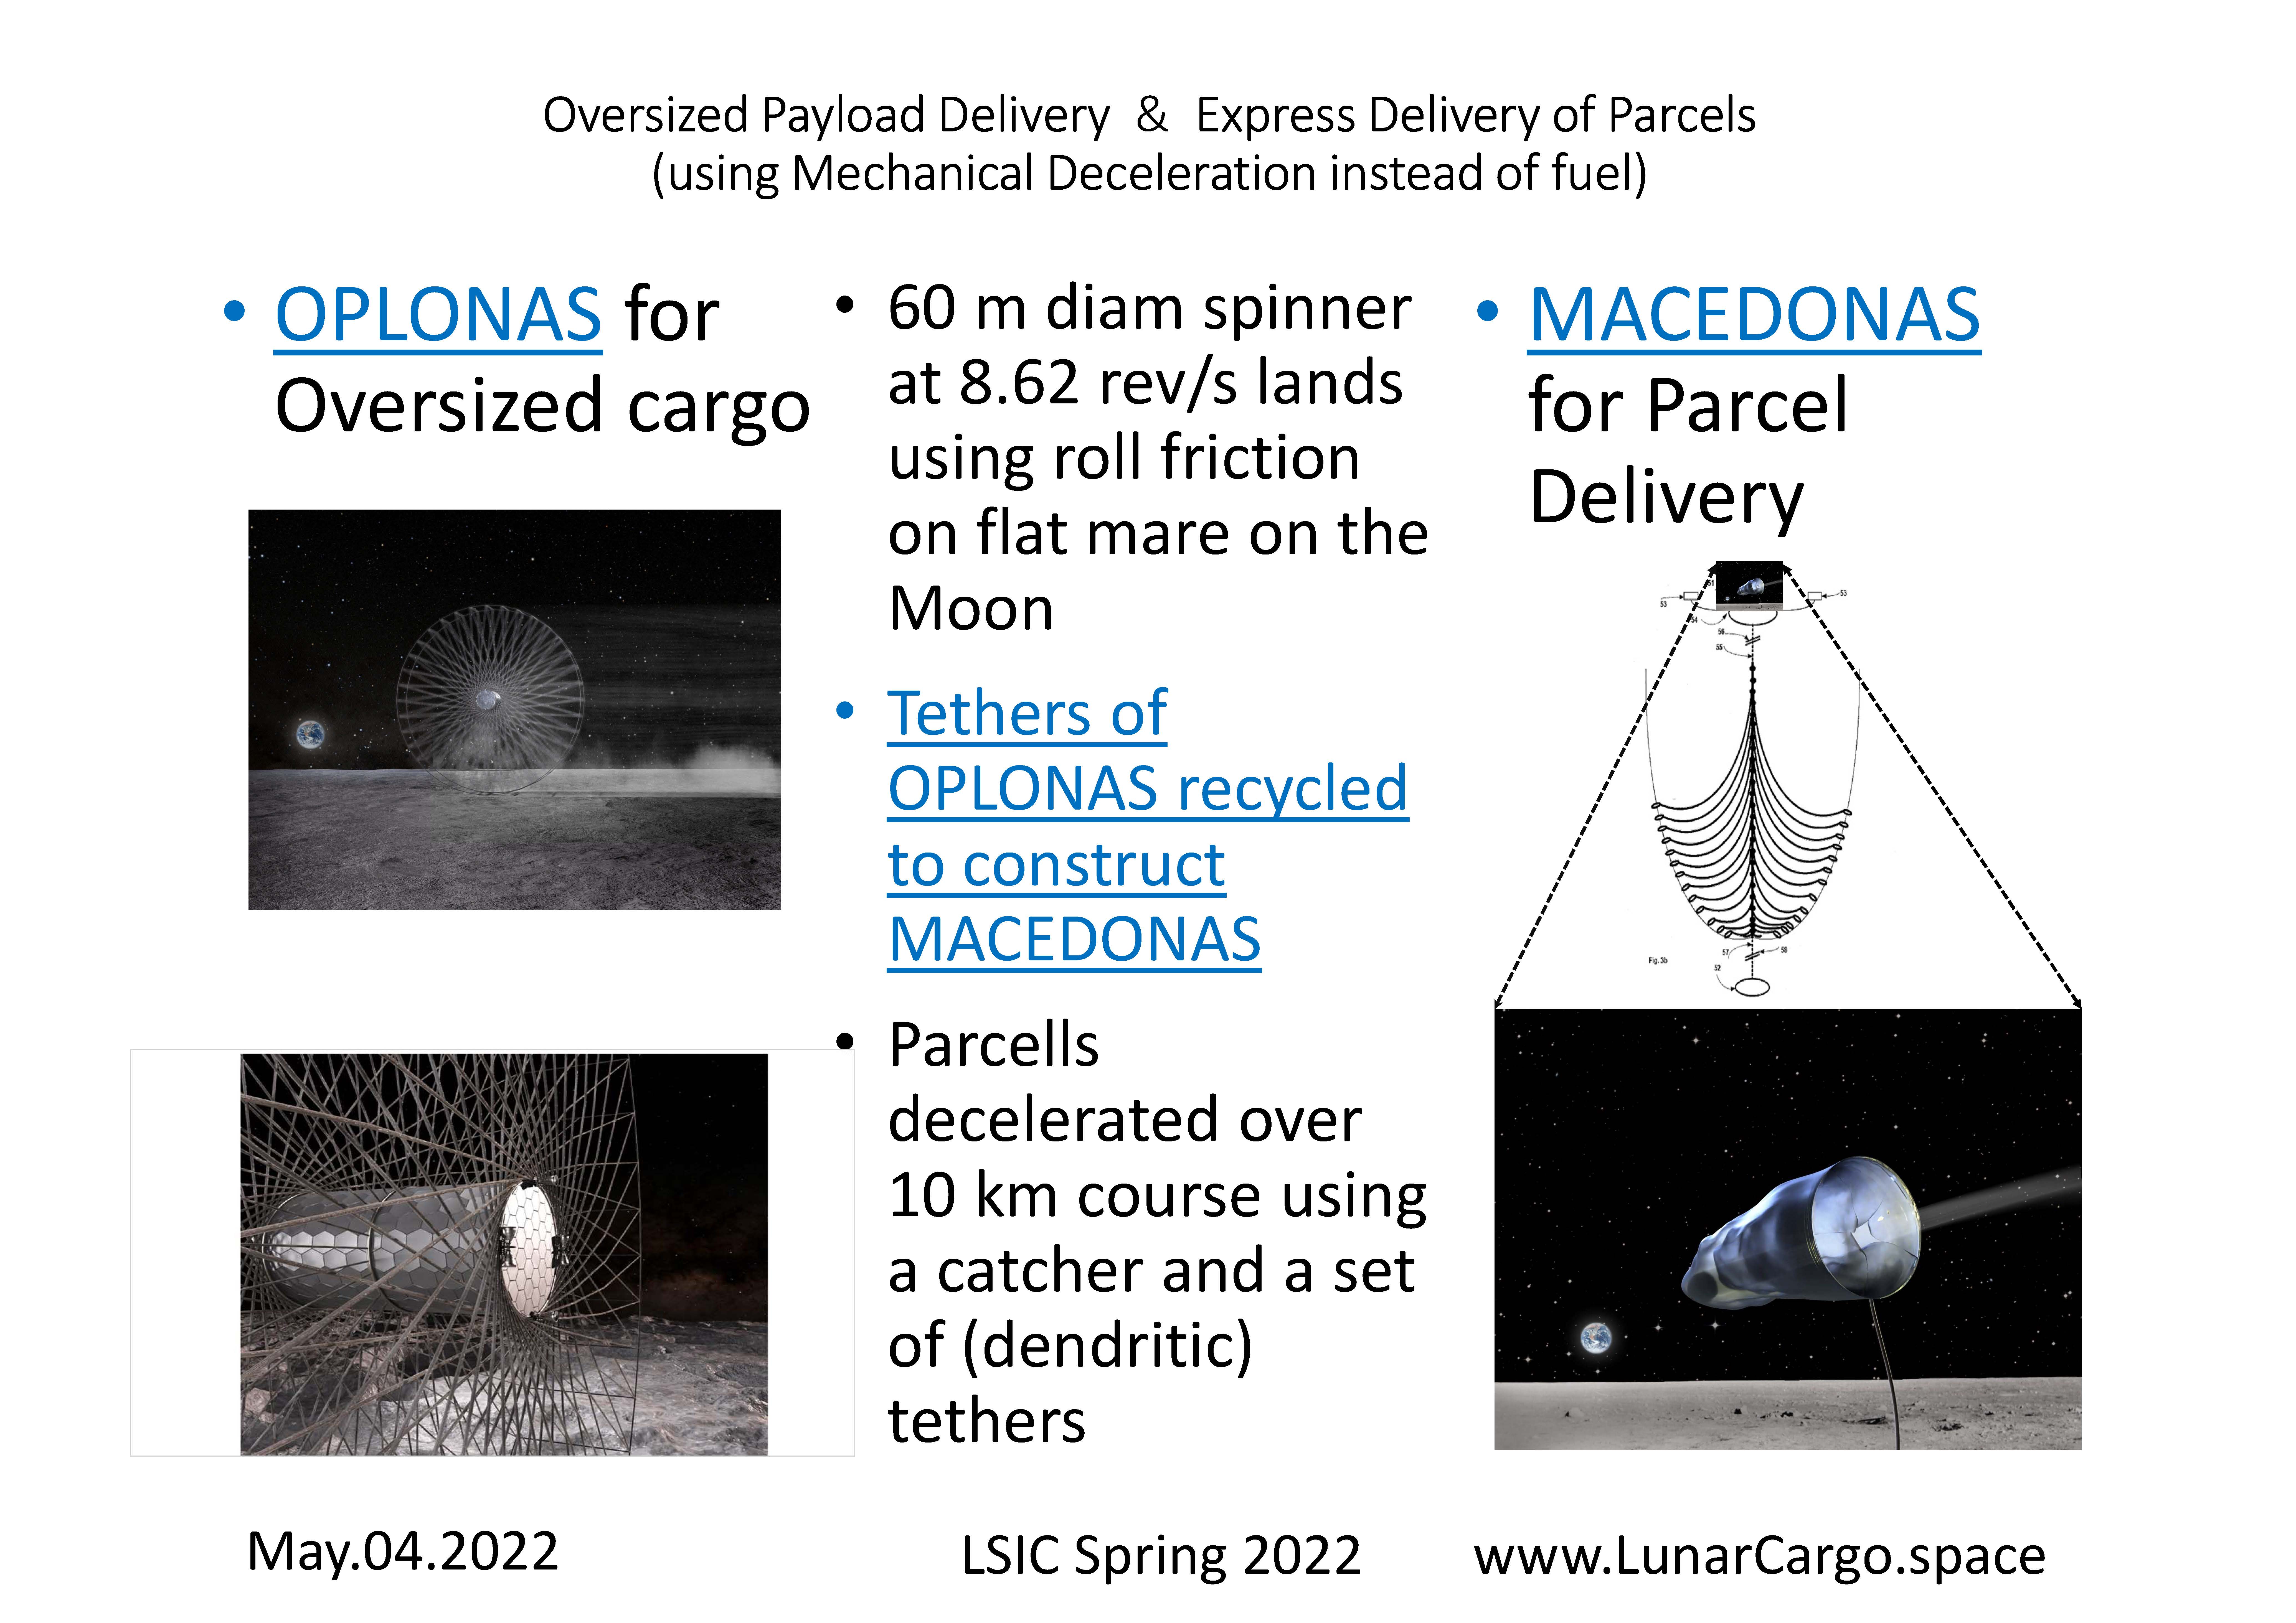 Two Low Cost Lunar Cargoes OPLONAS, MACEDONAS